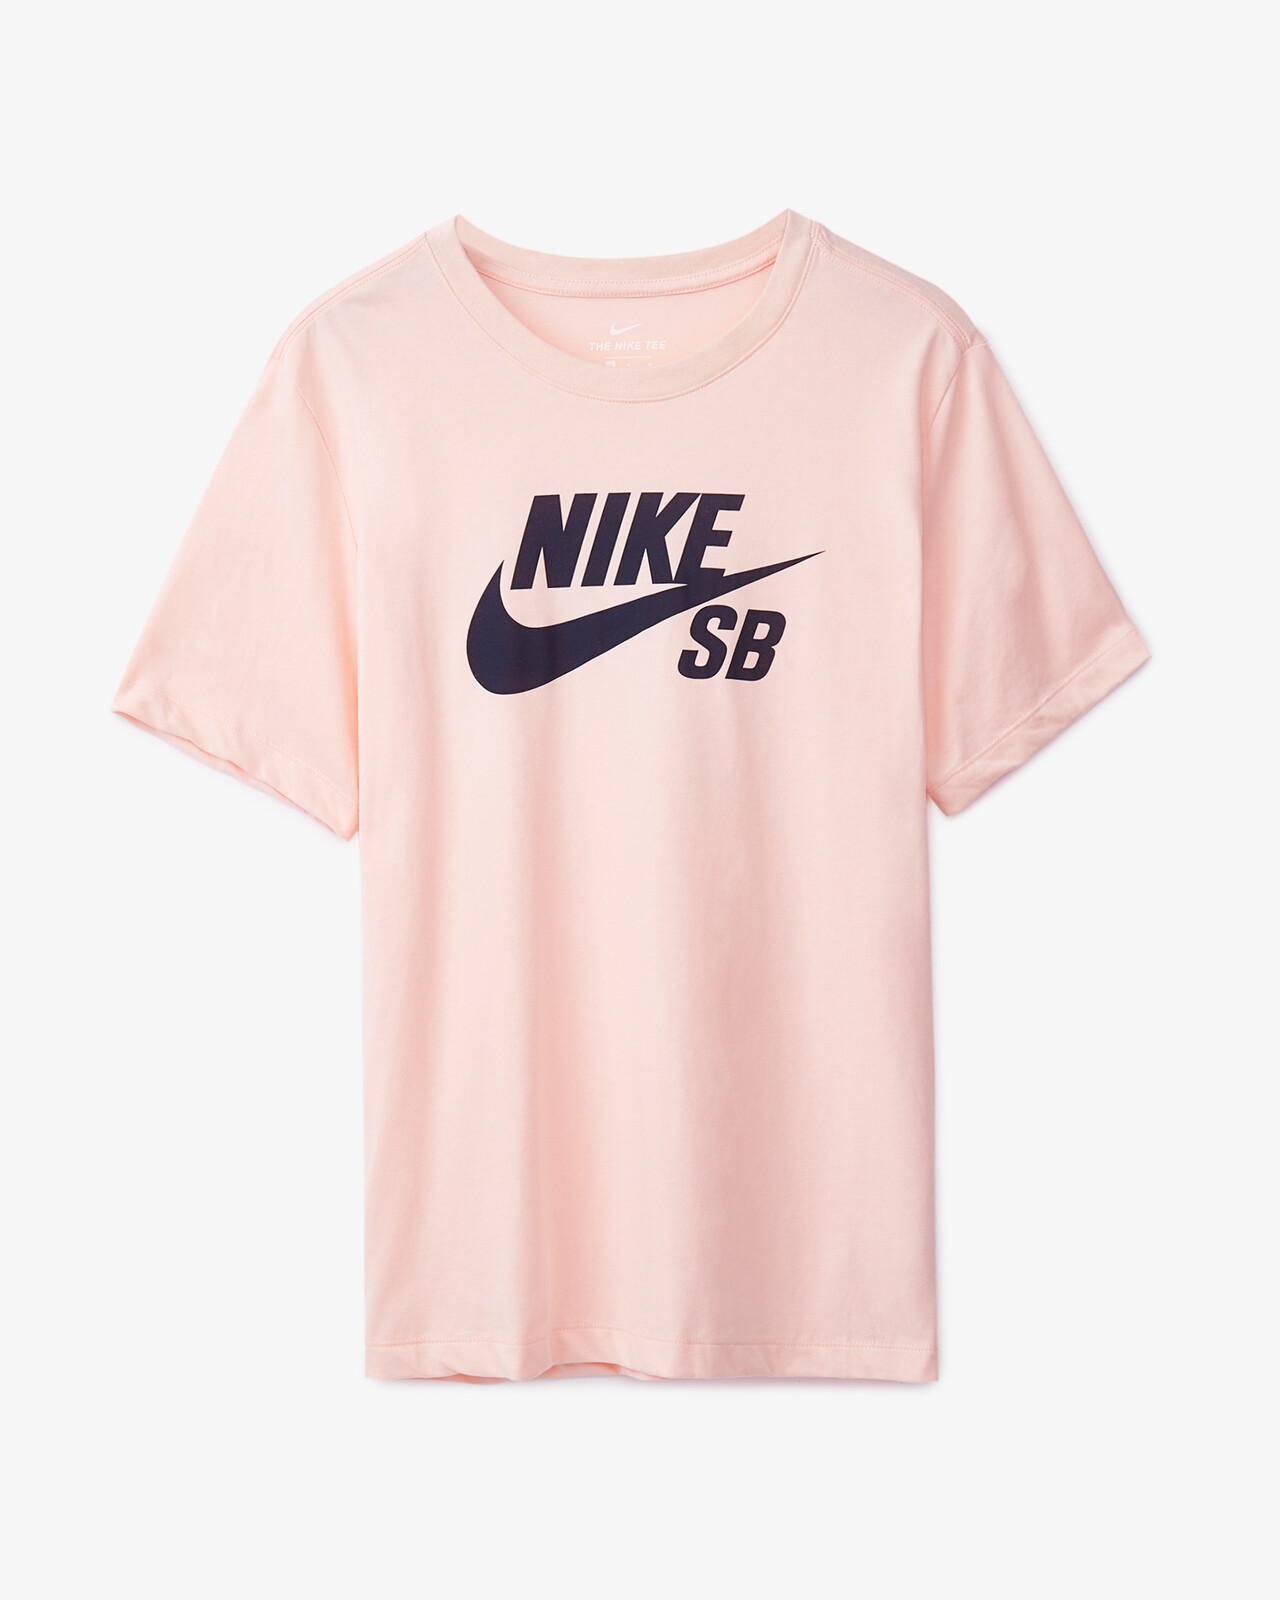 soft pink nike shirt